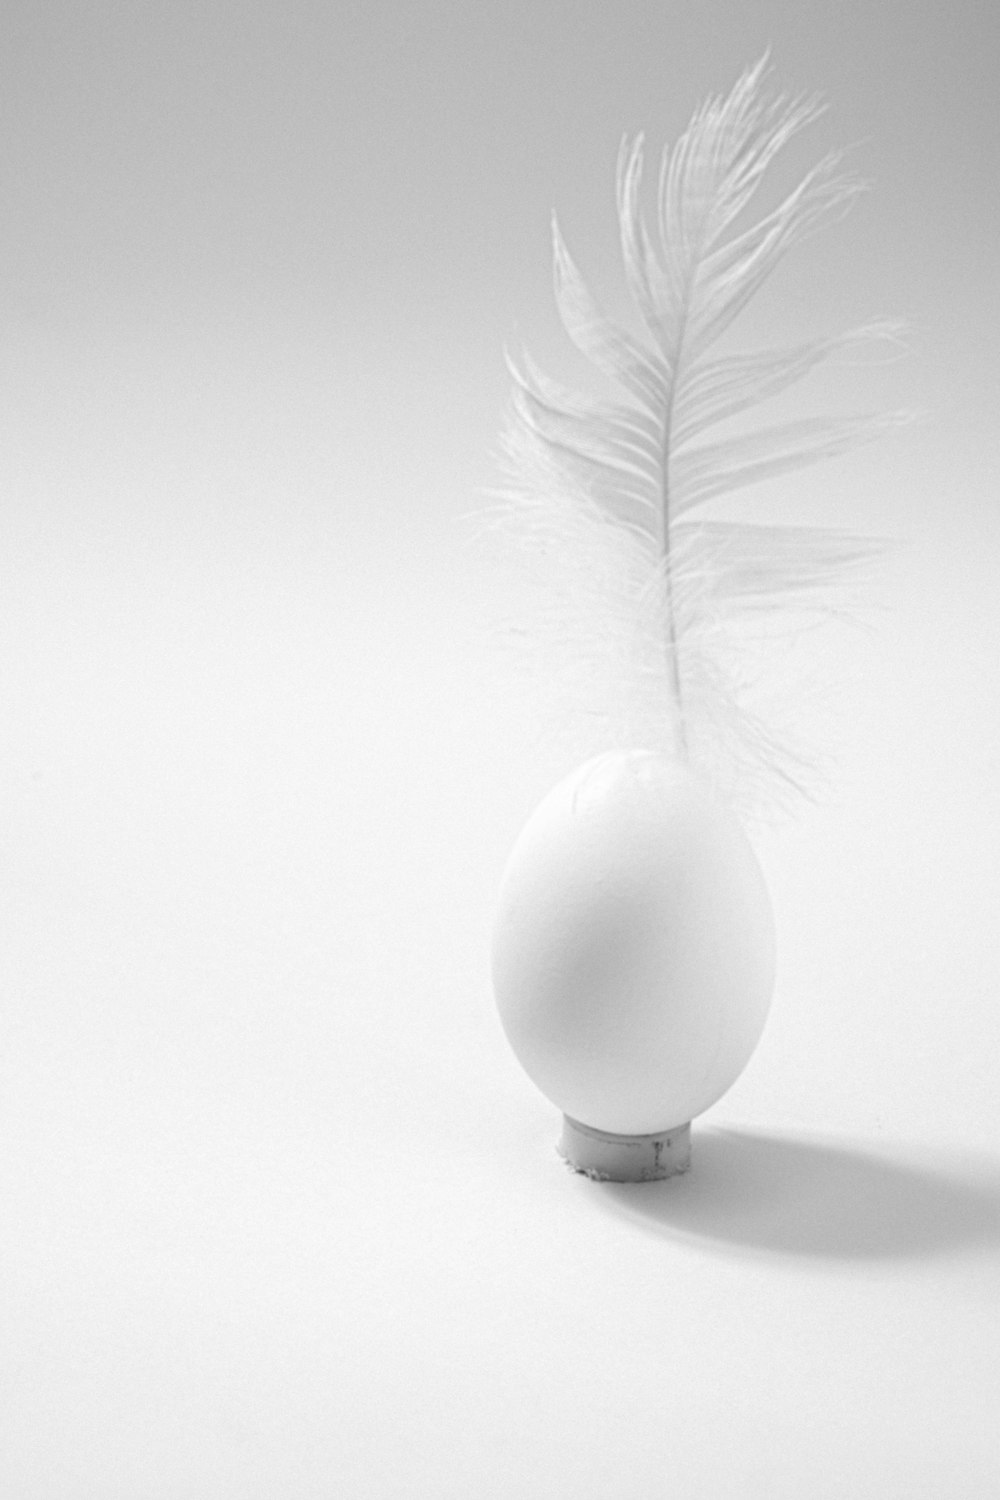 white feather beside white decorative egg